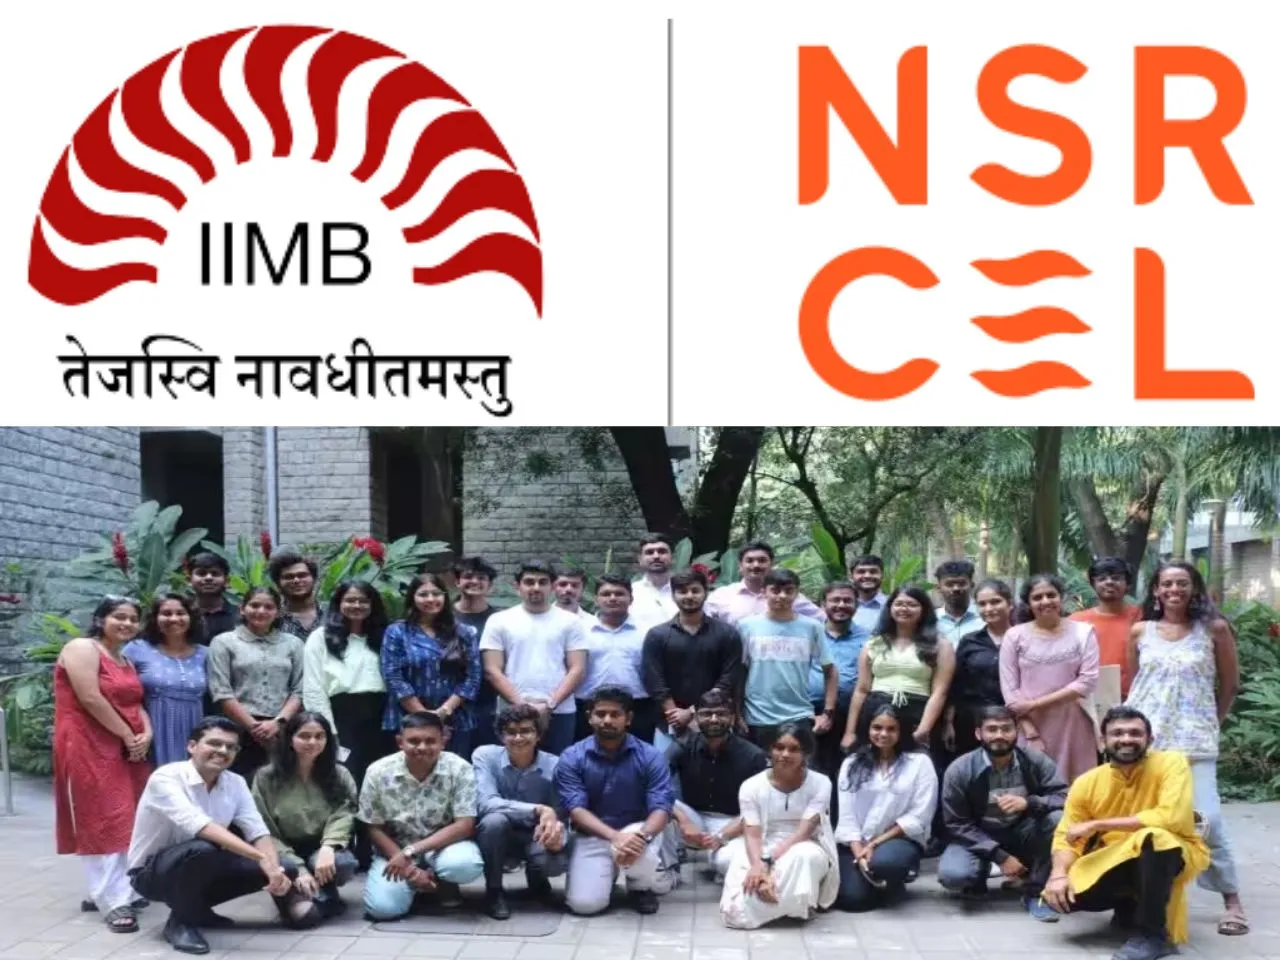 NSRCEL IIMB Launches Campus Founders Program Nurture Student Entrepreneurs